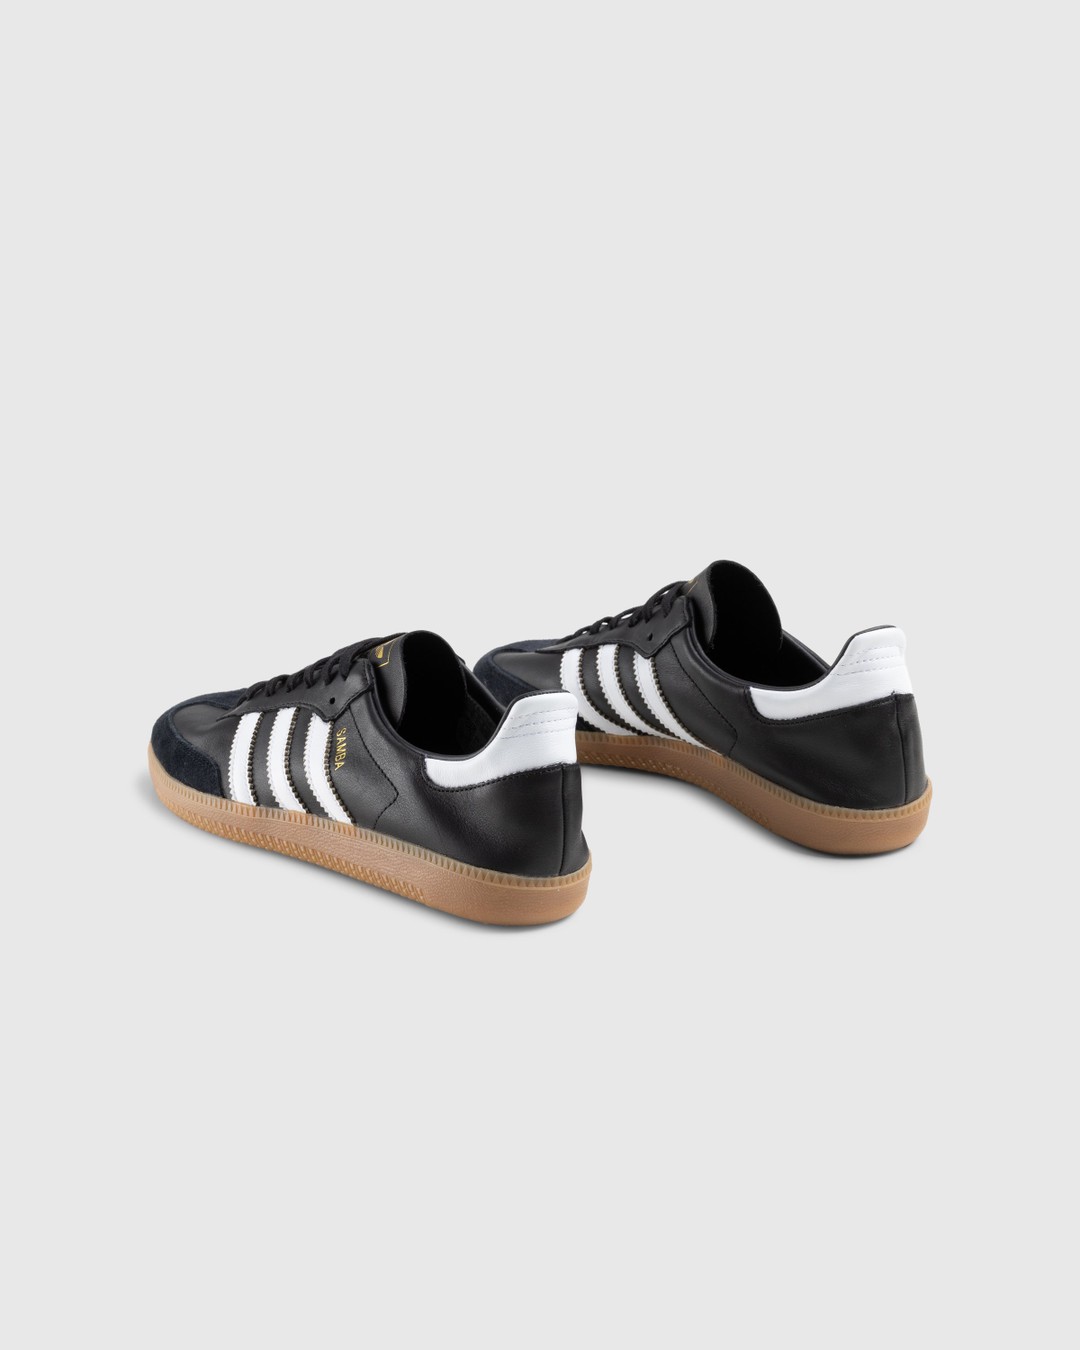 Adidas – Samba Decon Black | Highsnobiety Shop